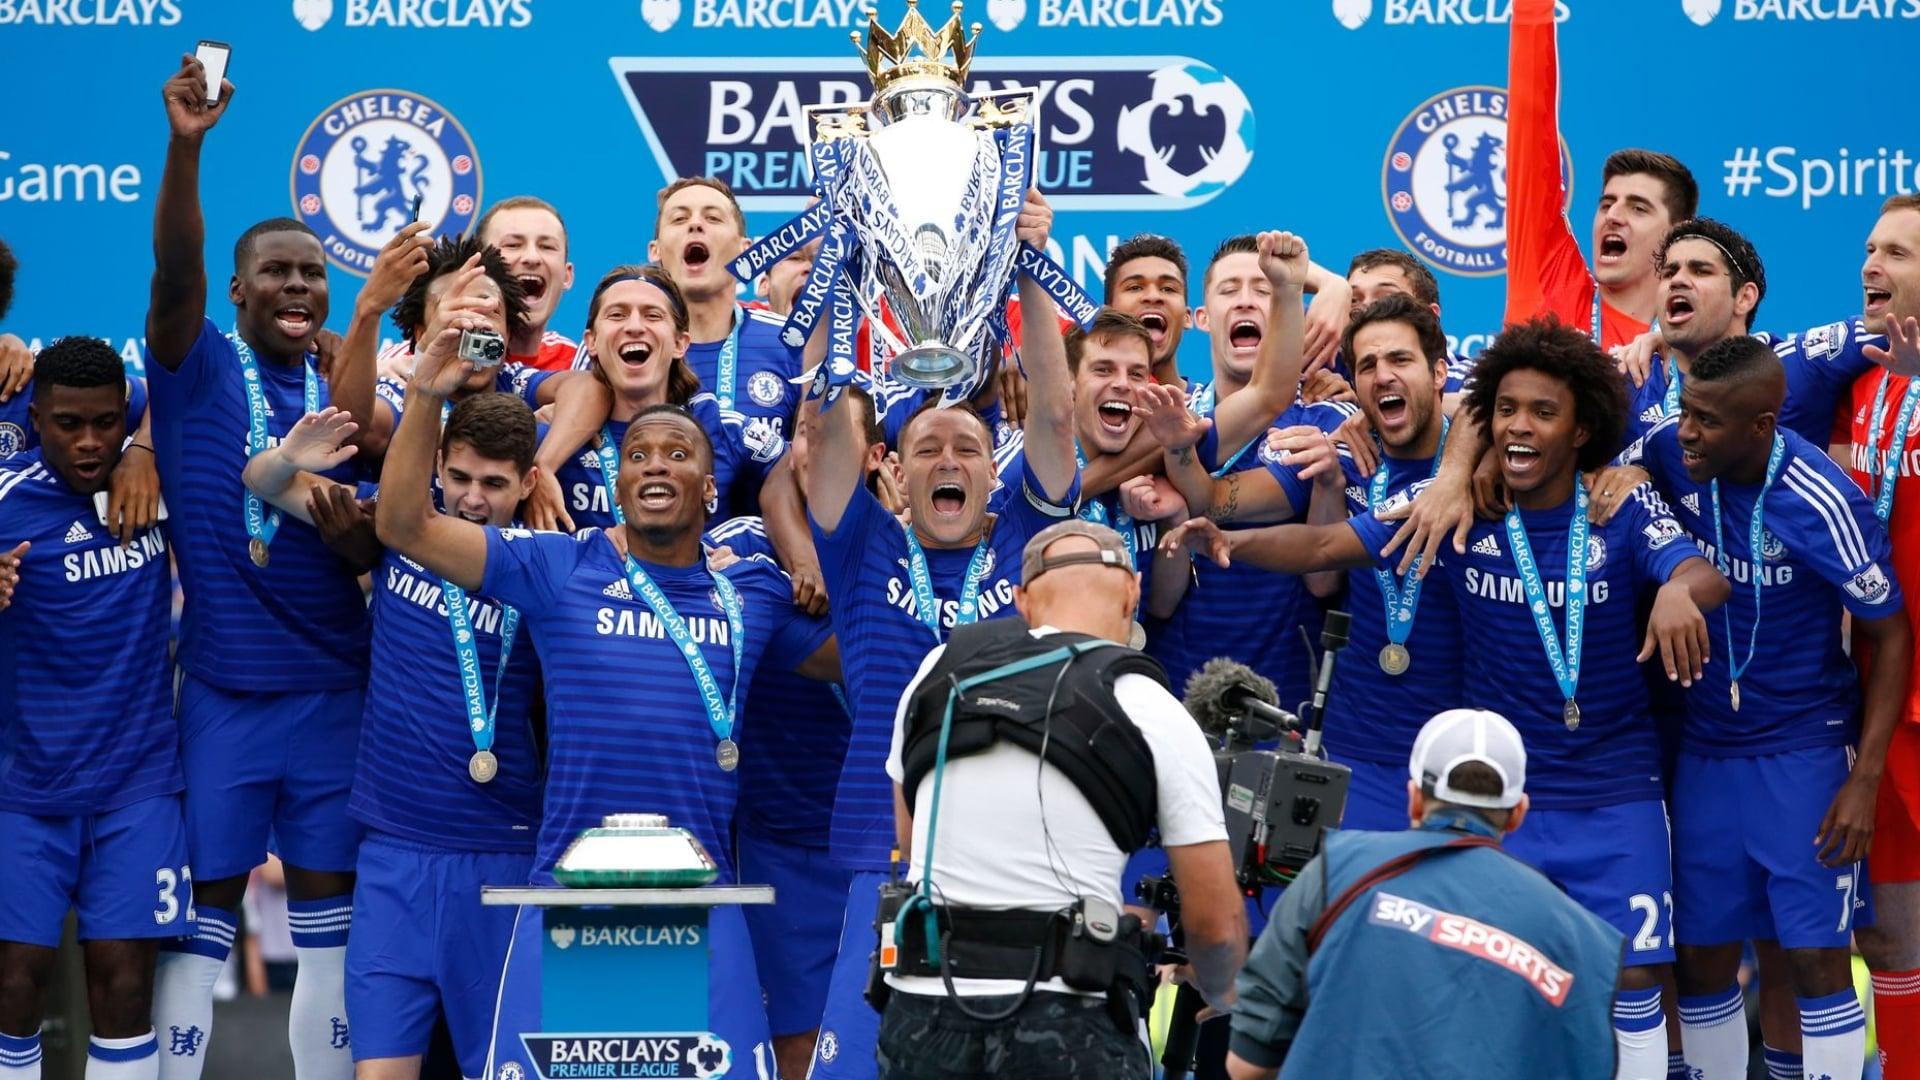 Chelsea FC - Season Review 2014/15 backdrop